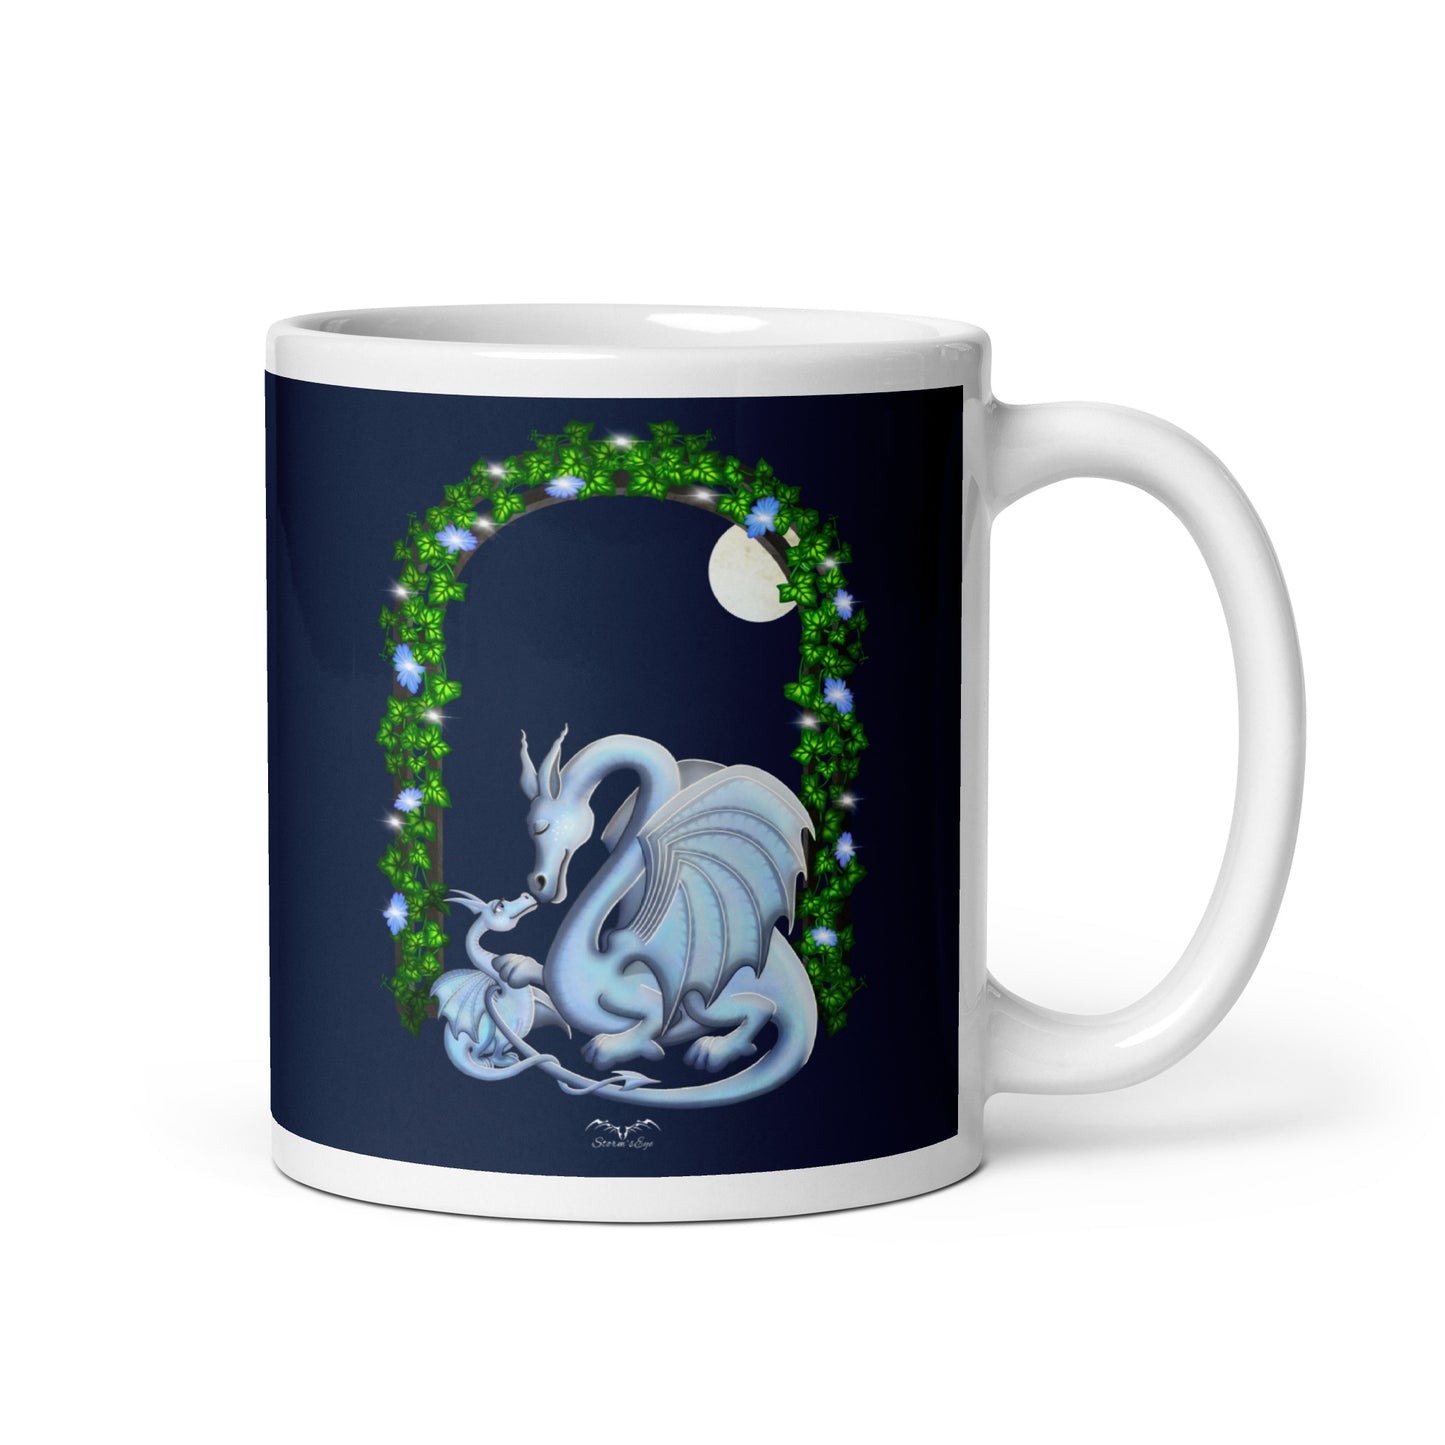 Mum And Baby Dragon Coffee Mug Blue by stormseye design